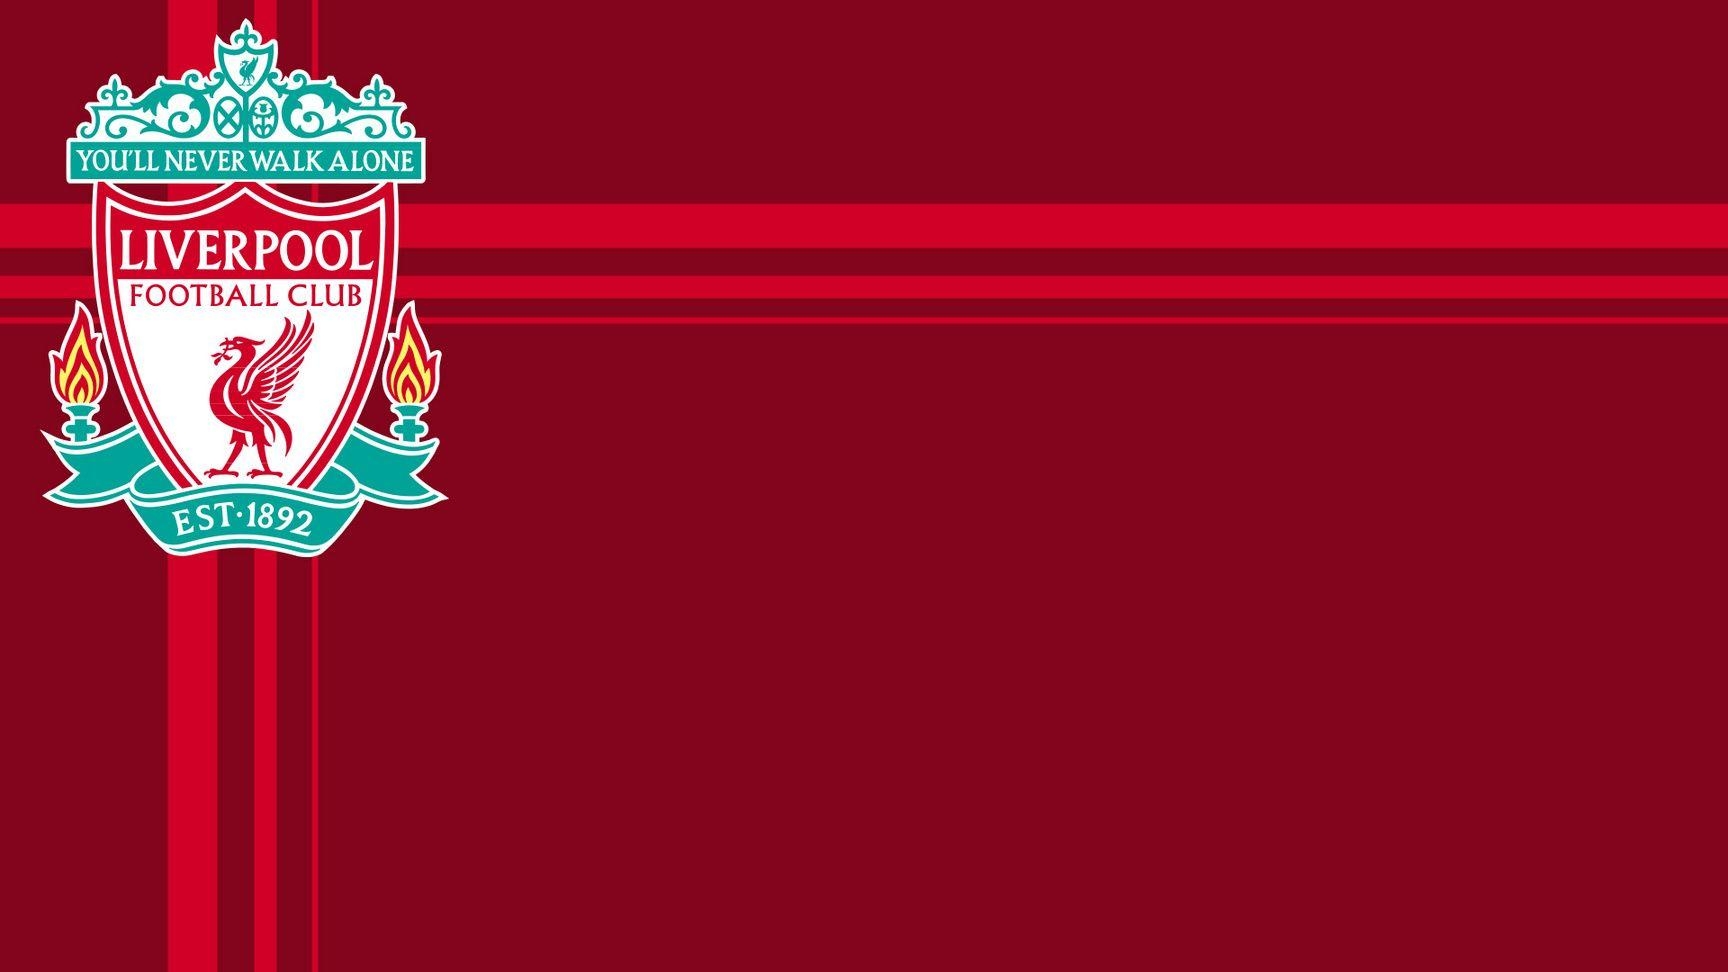 Liverpool-34 - Sheffield United Vs Liverpool Badge - HD Wallpaper 